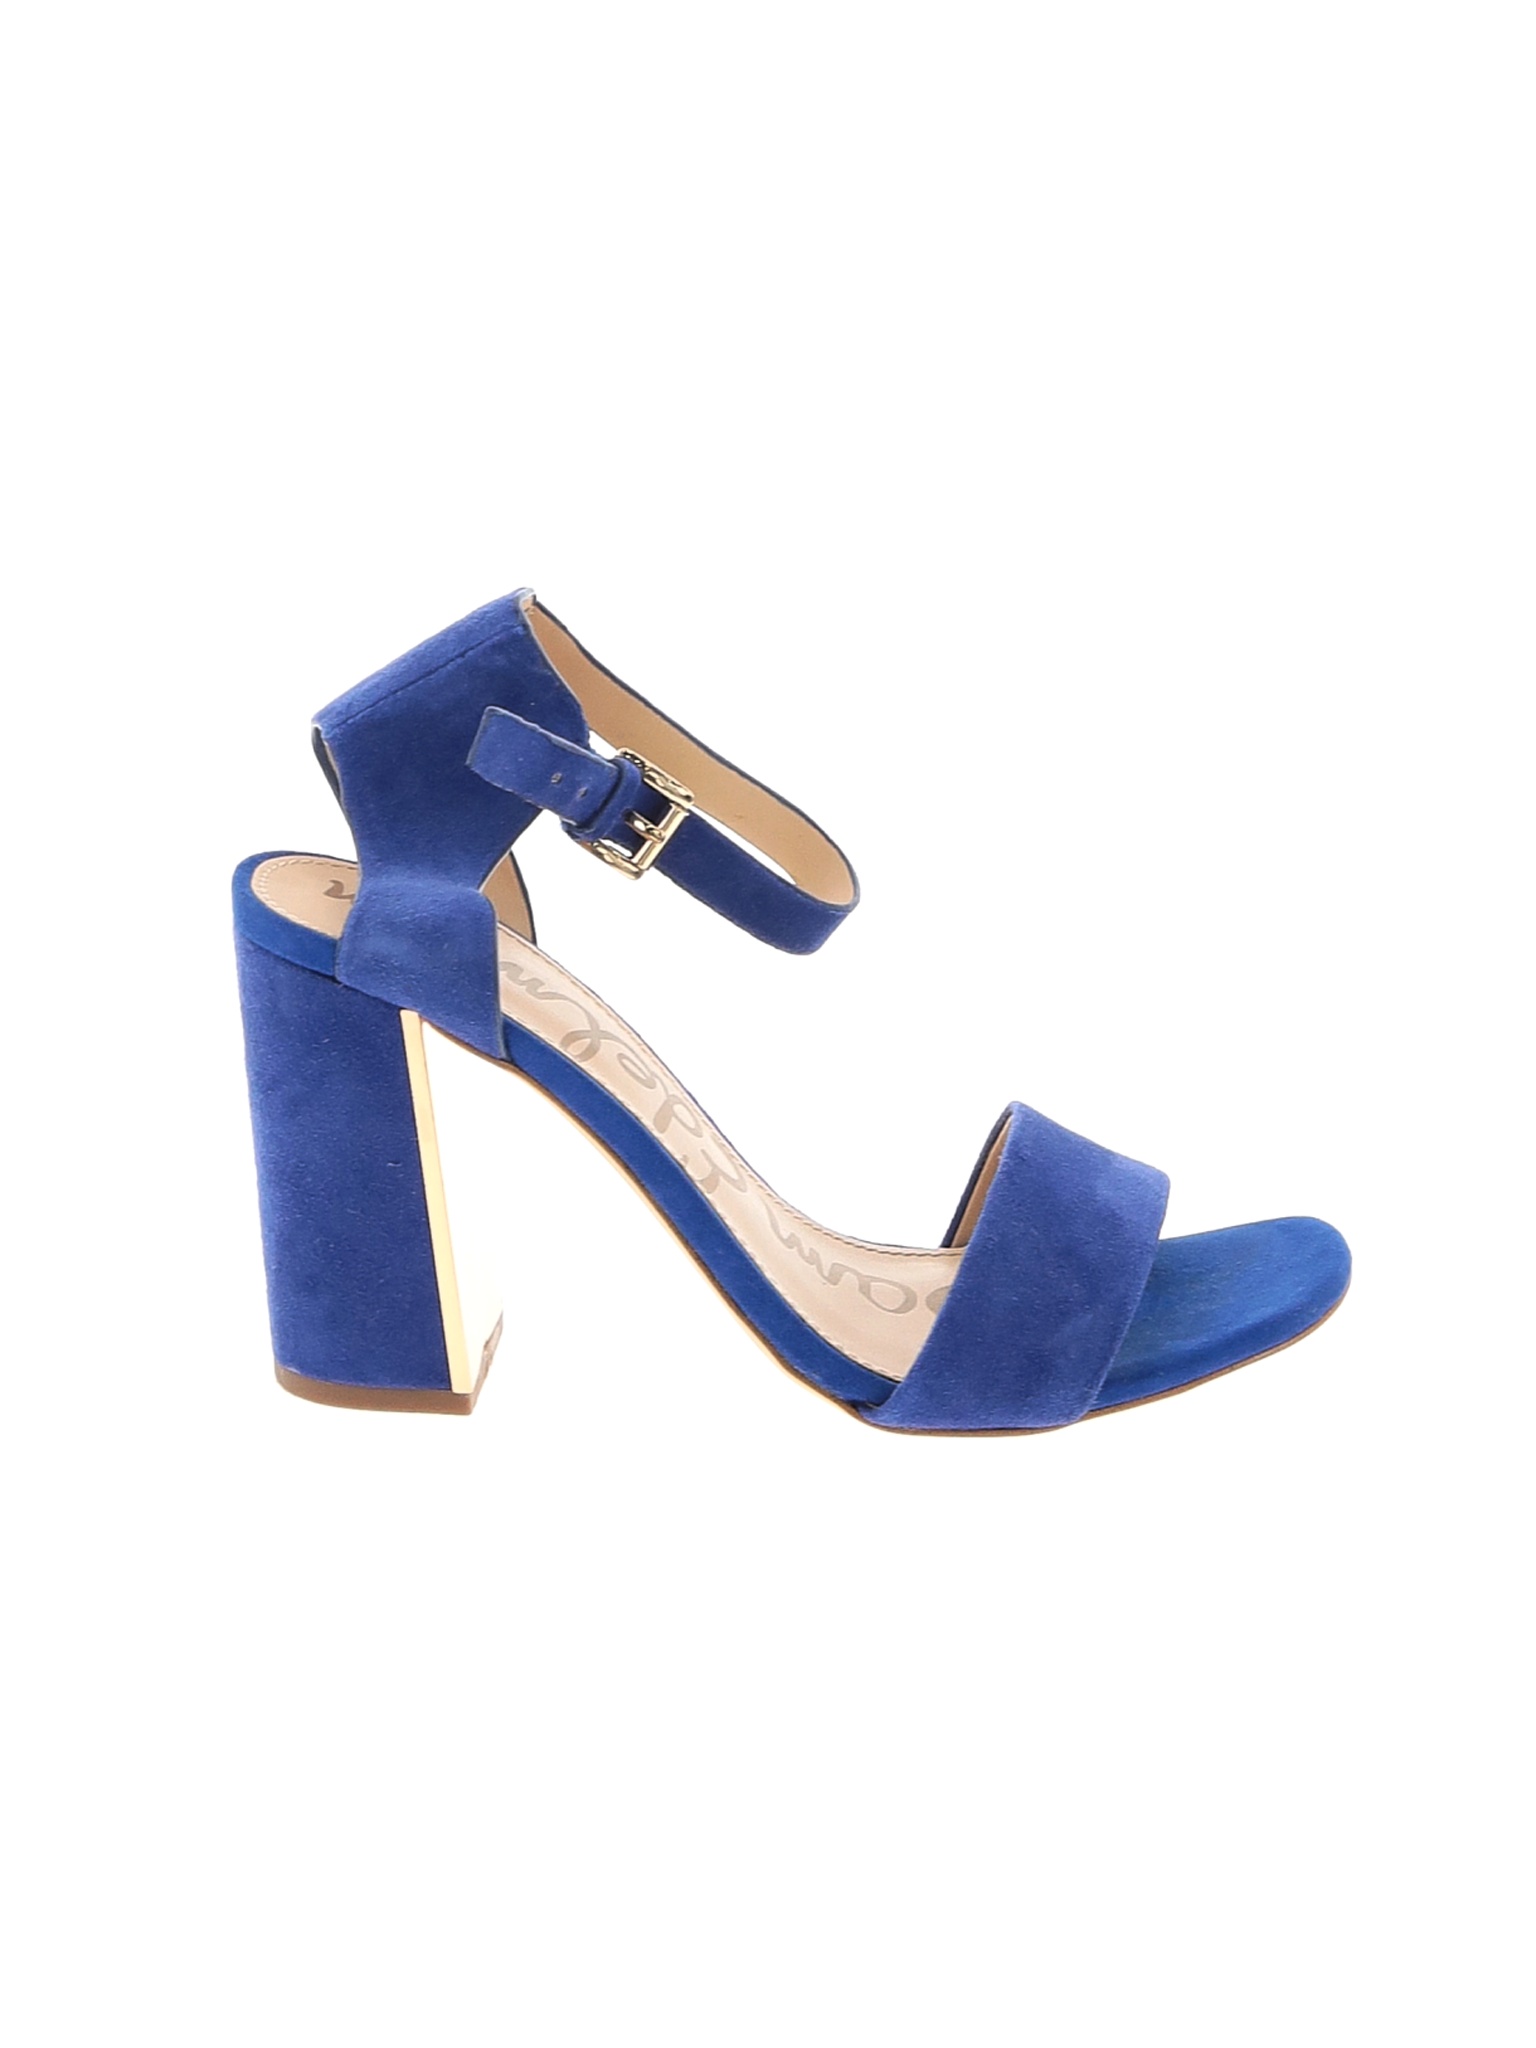 Sam Edelman Women Blue Heels US 7.5 | eBay